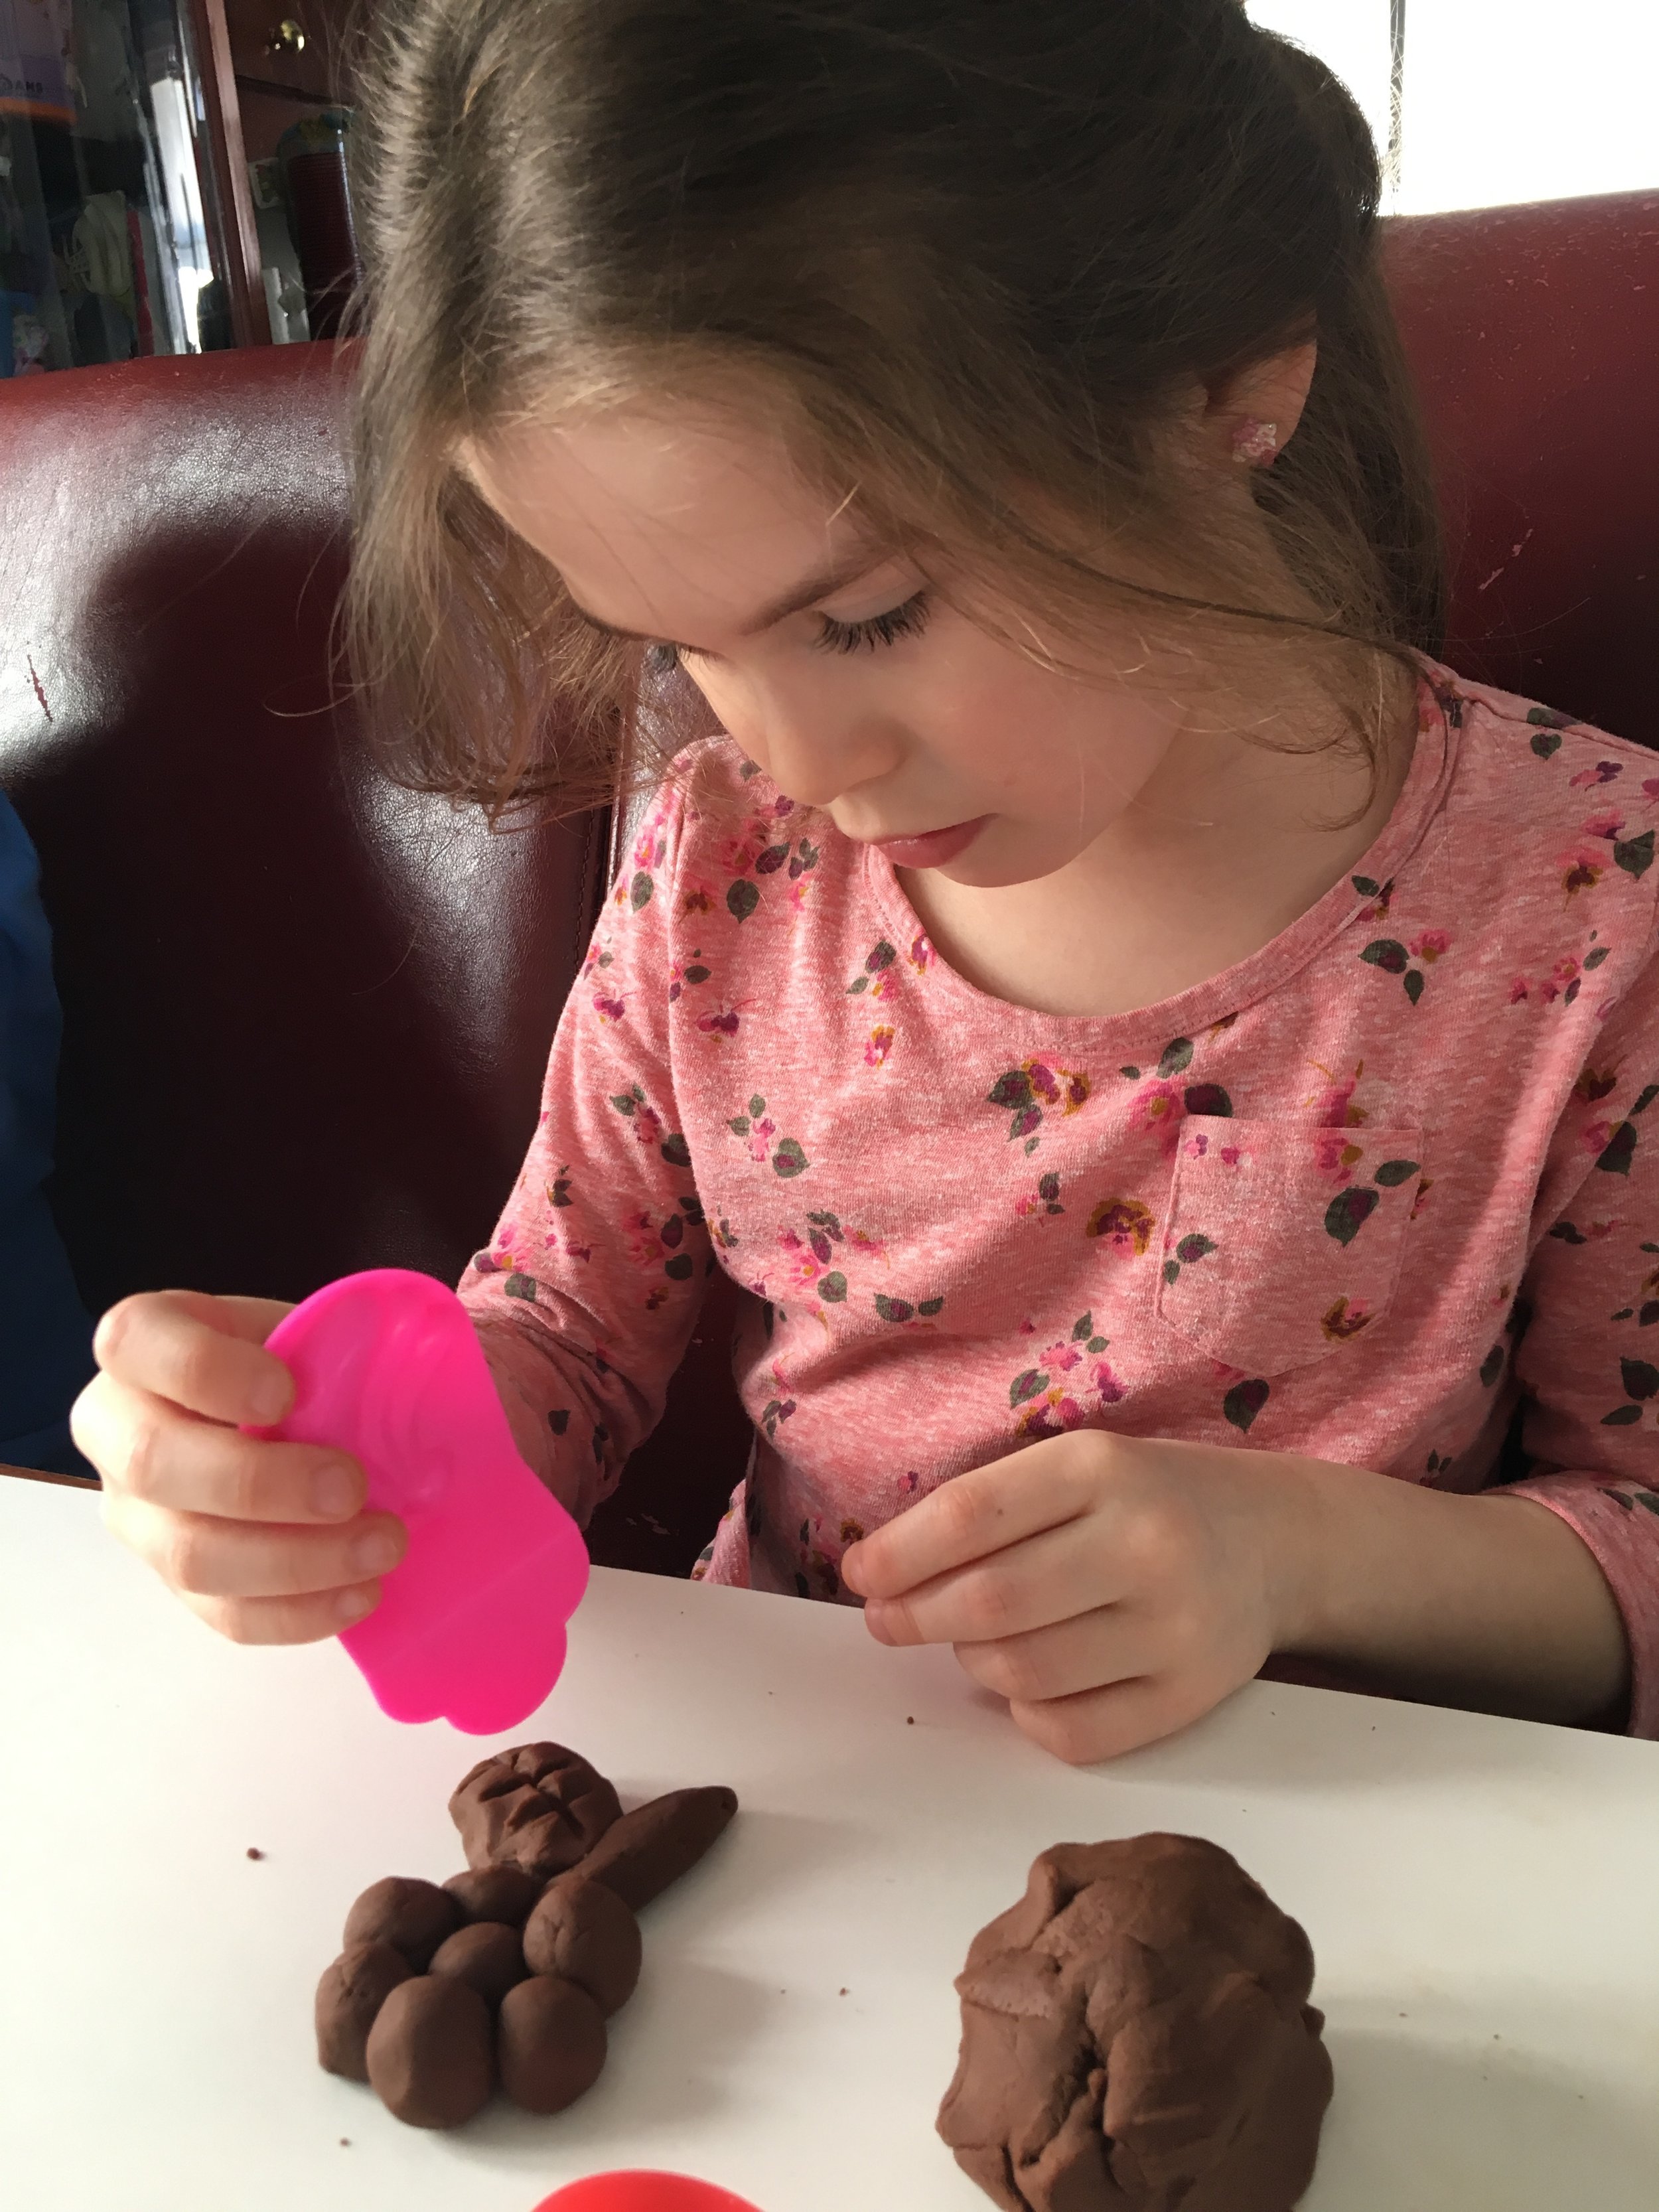 Pâte à modeler chocolatée — Je suis une maman